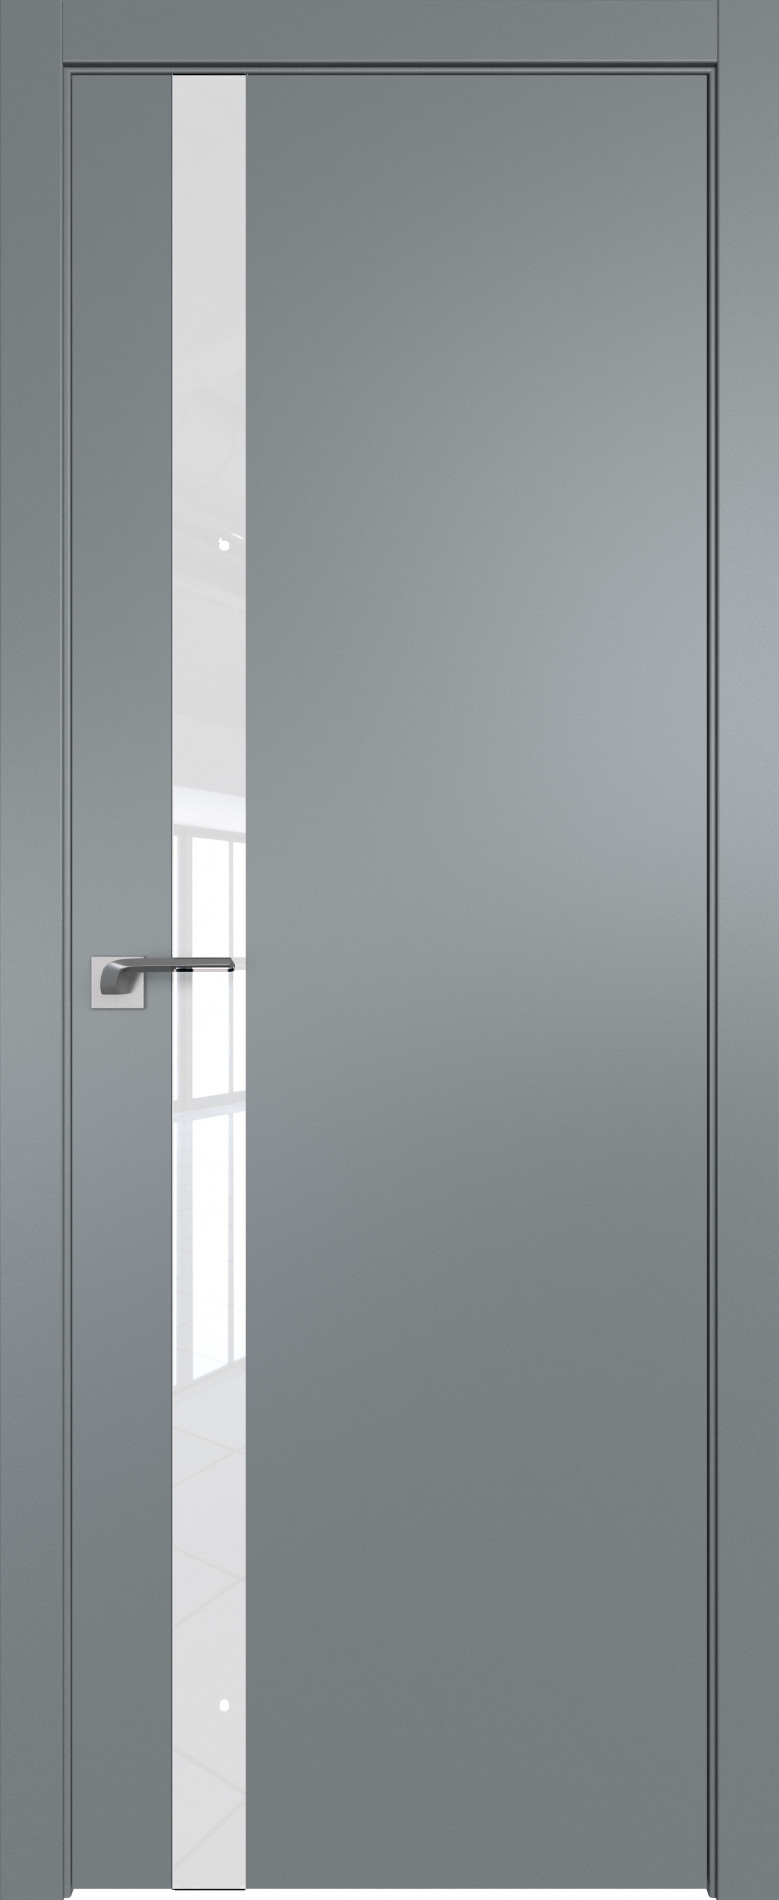 межкомнатные двери  Profil Doors 6SMK ABS кварц матовый